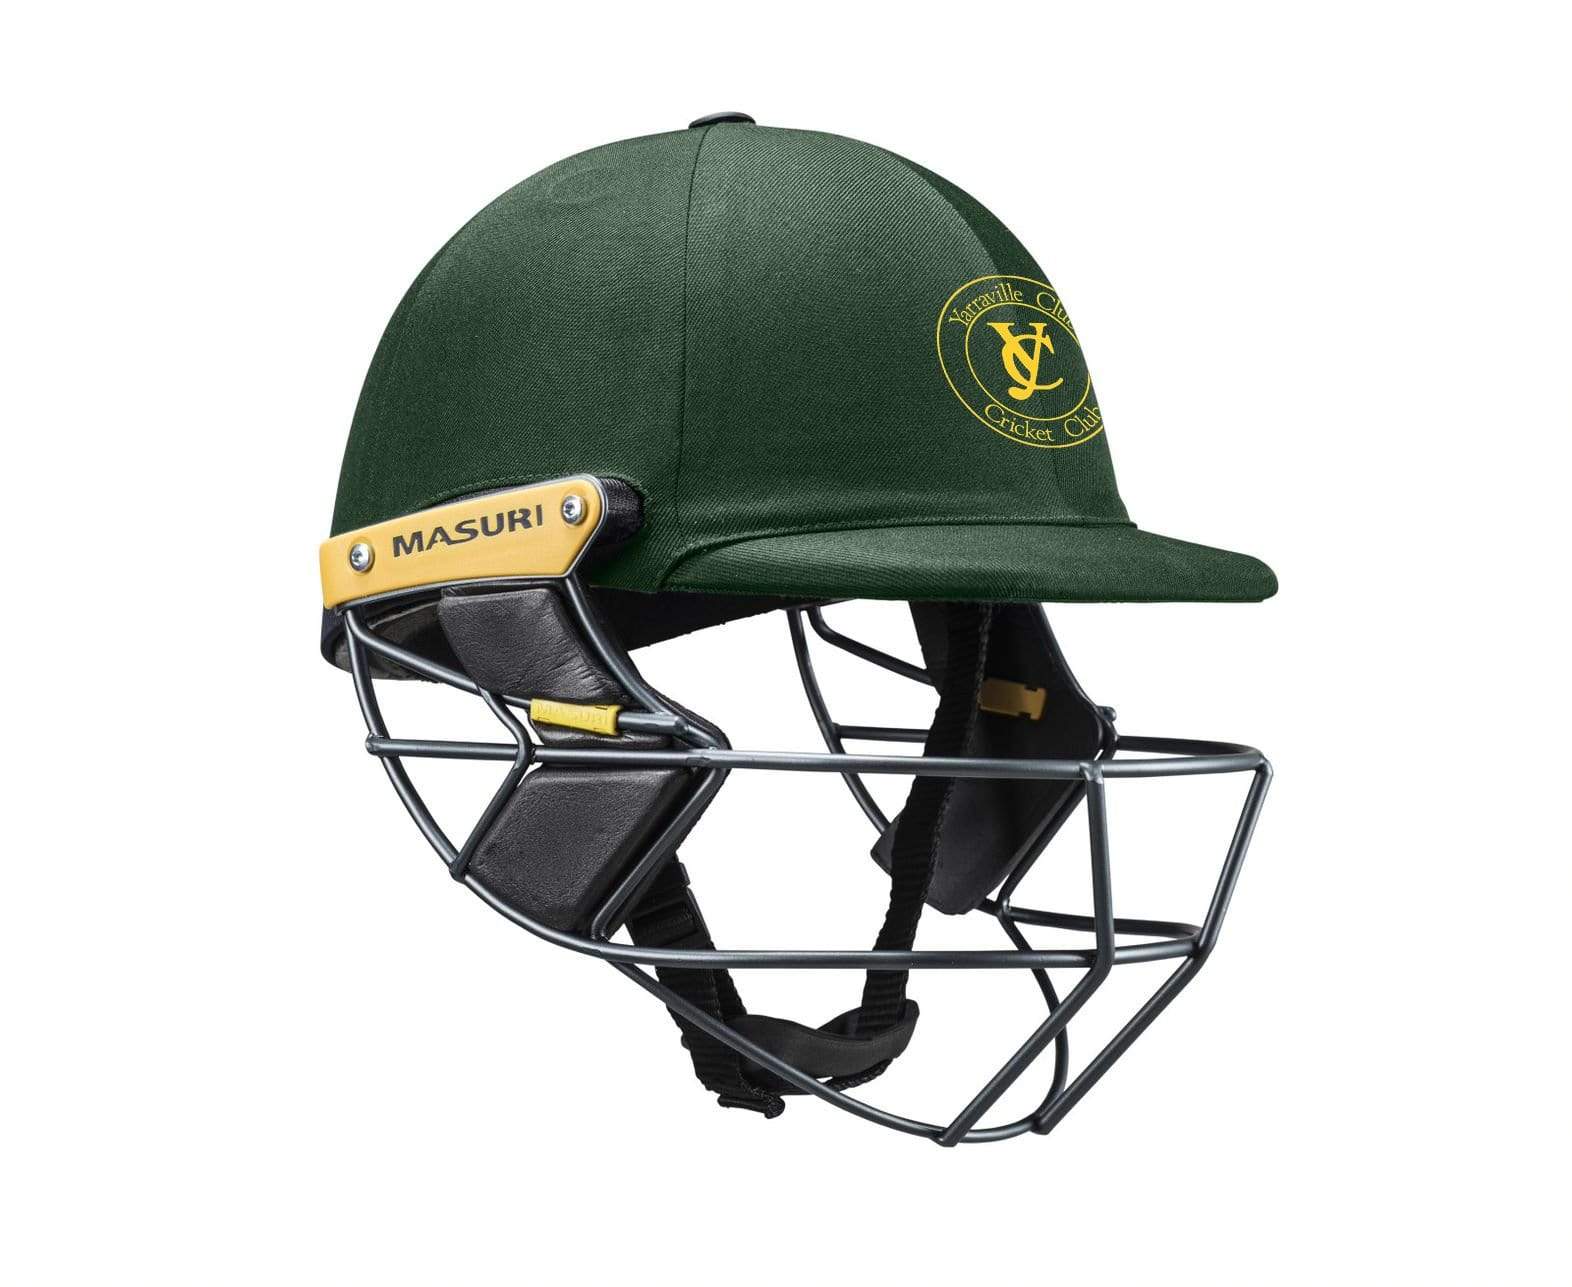 Masuri Club Helmet Yarraville Club Cricket Club Helmet